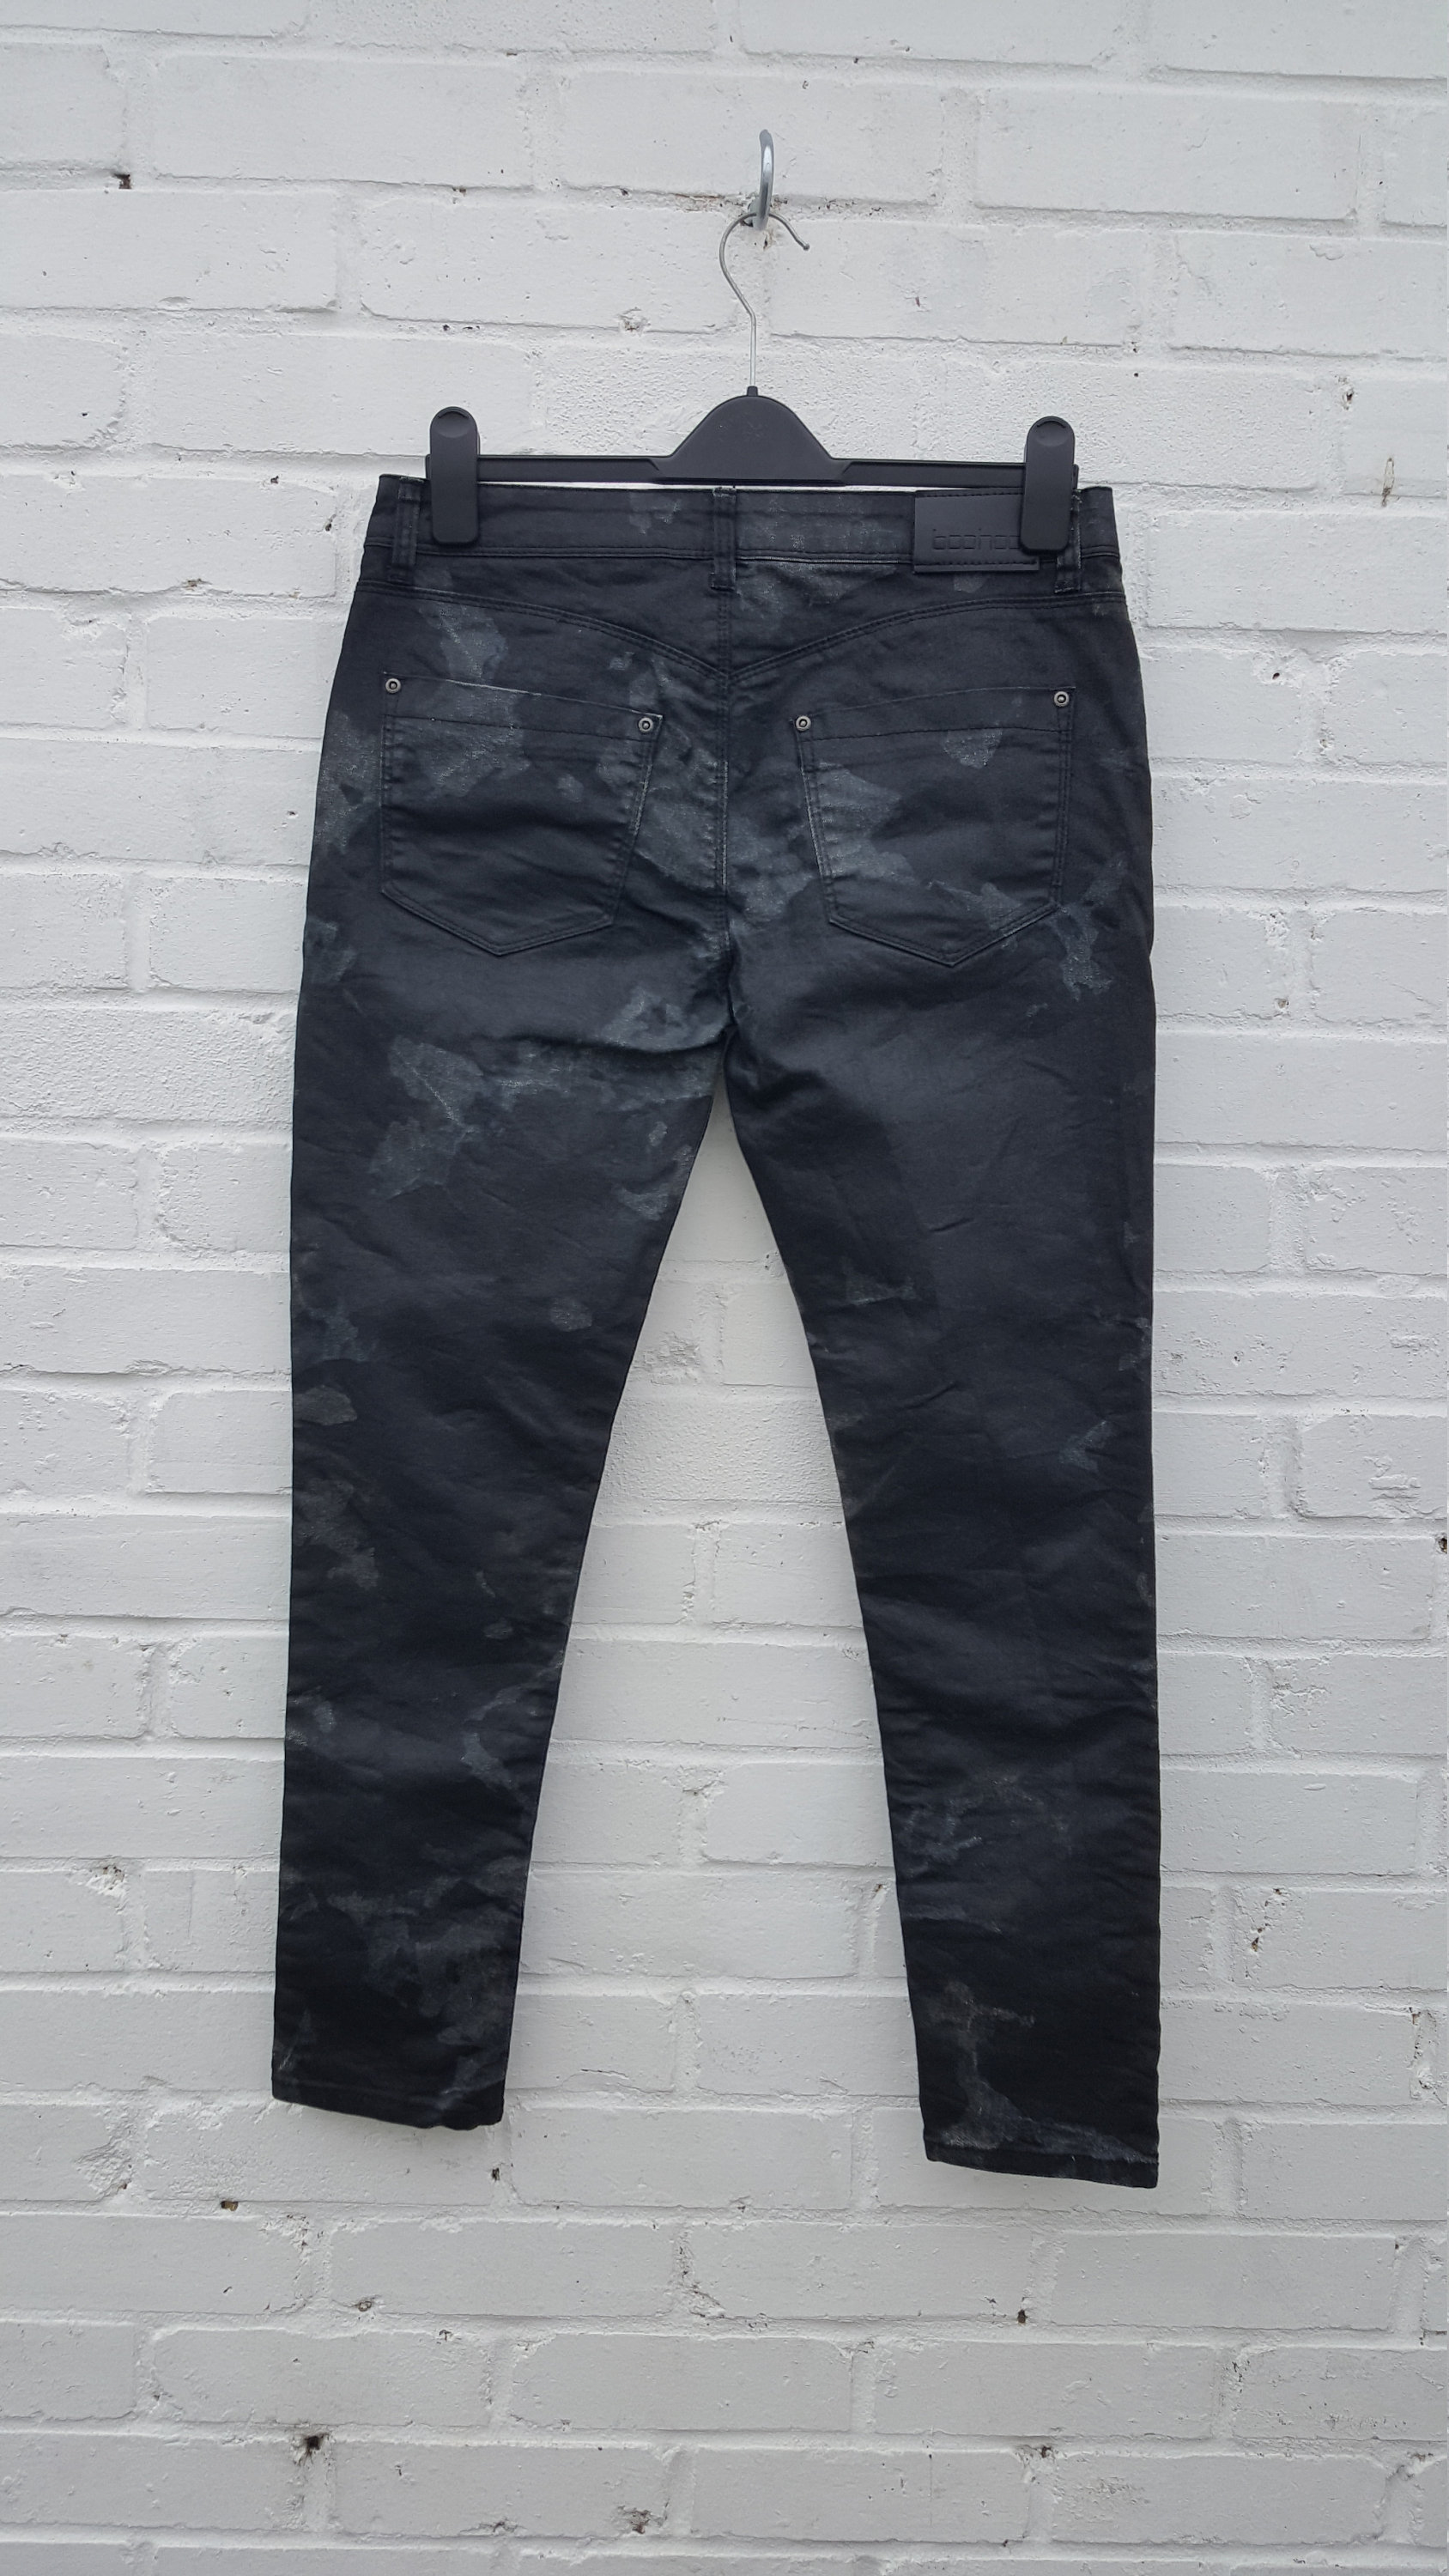 Forbyde efterfølger Klassificer Black Ripped Skinny Jeans Bleach Dye to Fit UK Size 12 or US - Etsy